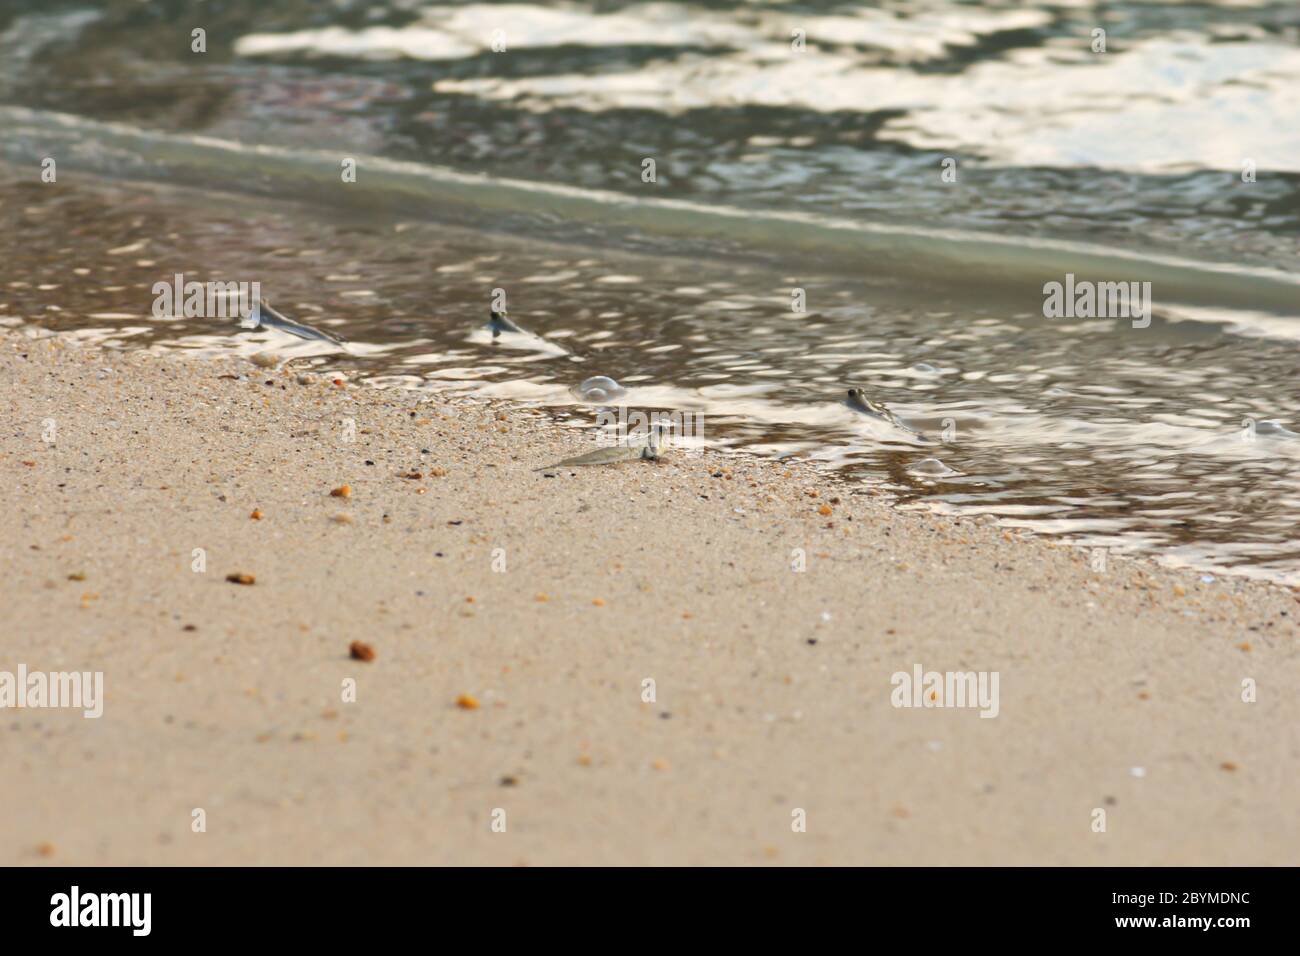 little fish mudskipper or amphibious fish on mud at sea Stock Photo